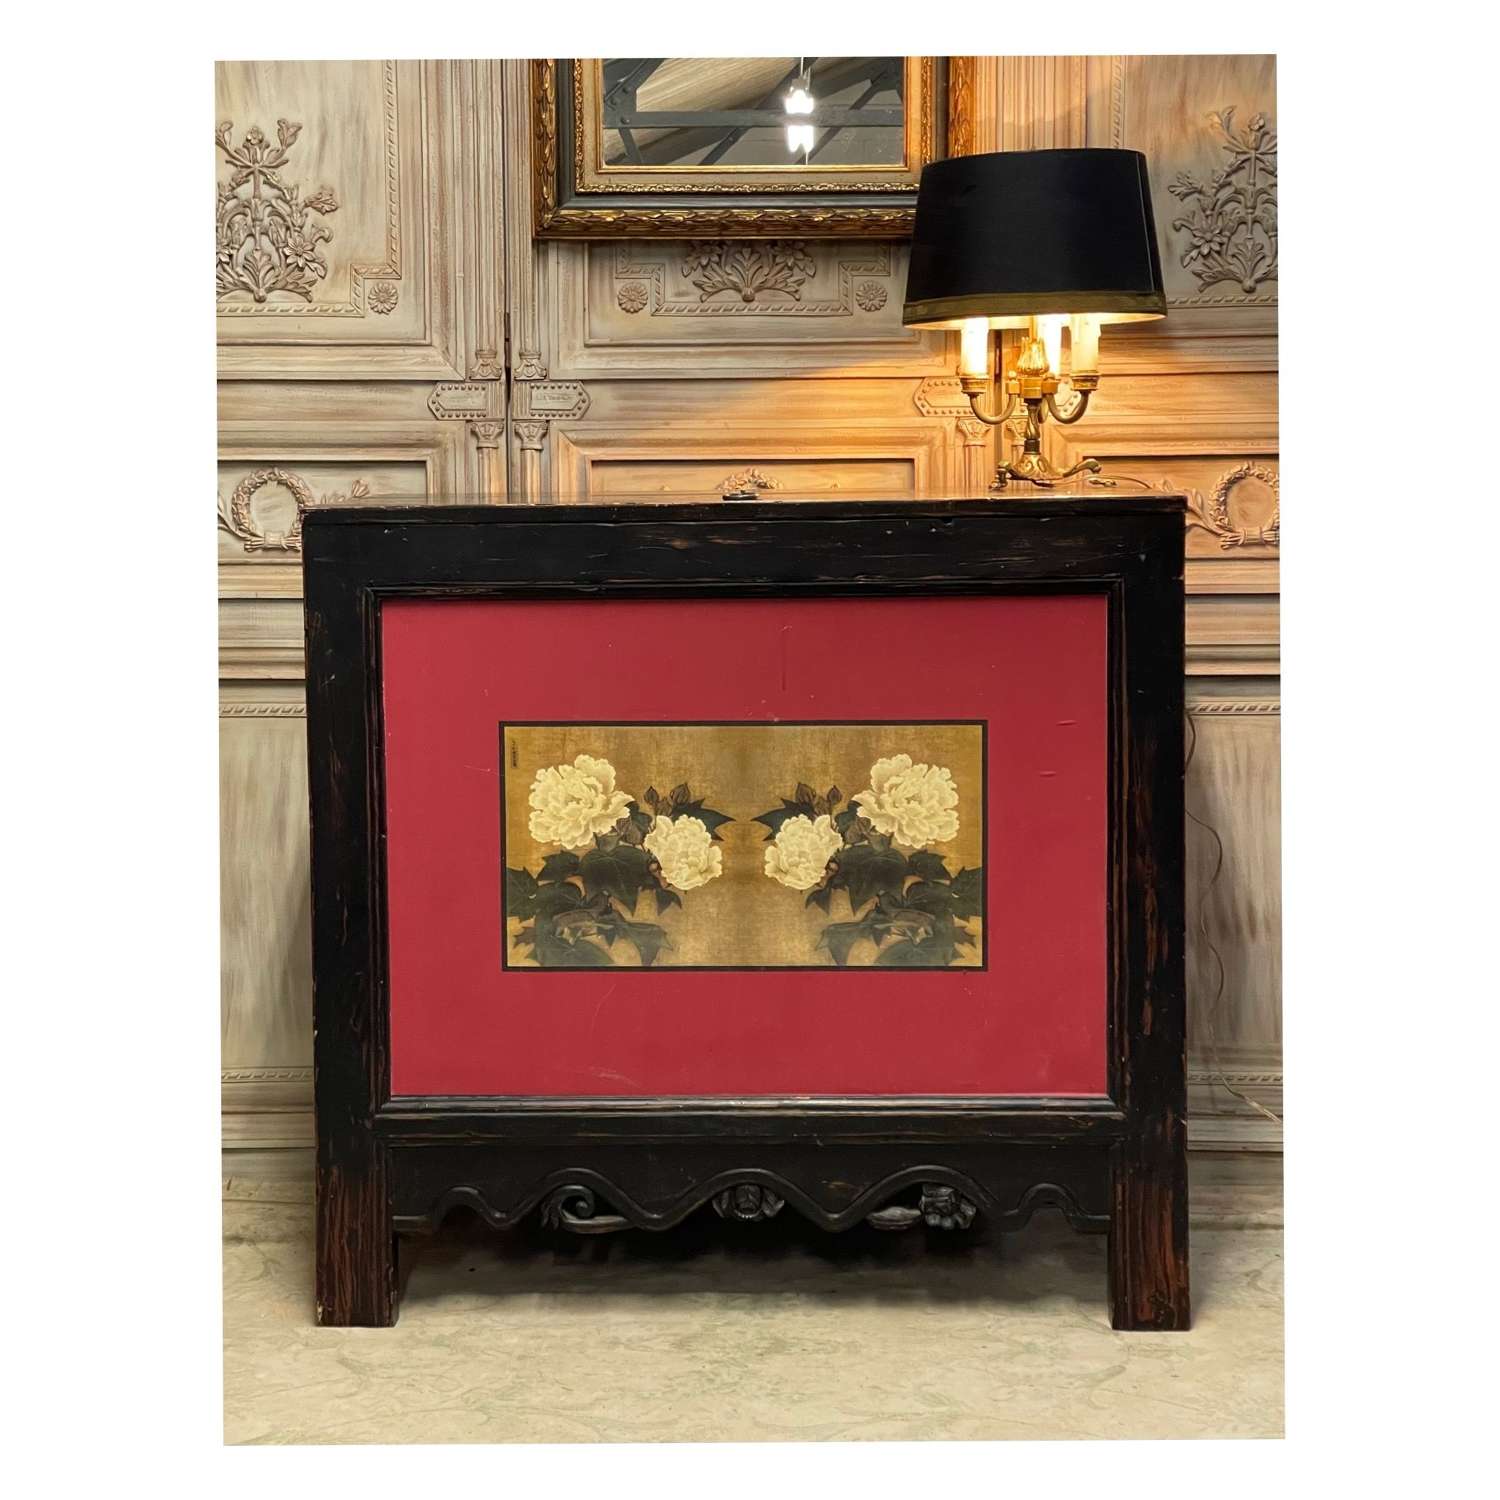 Decorative storage chest